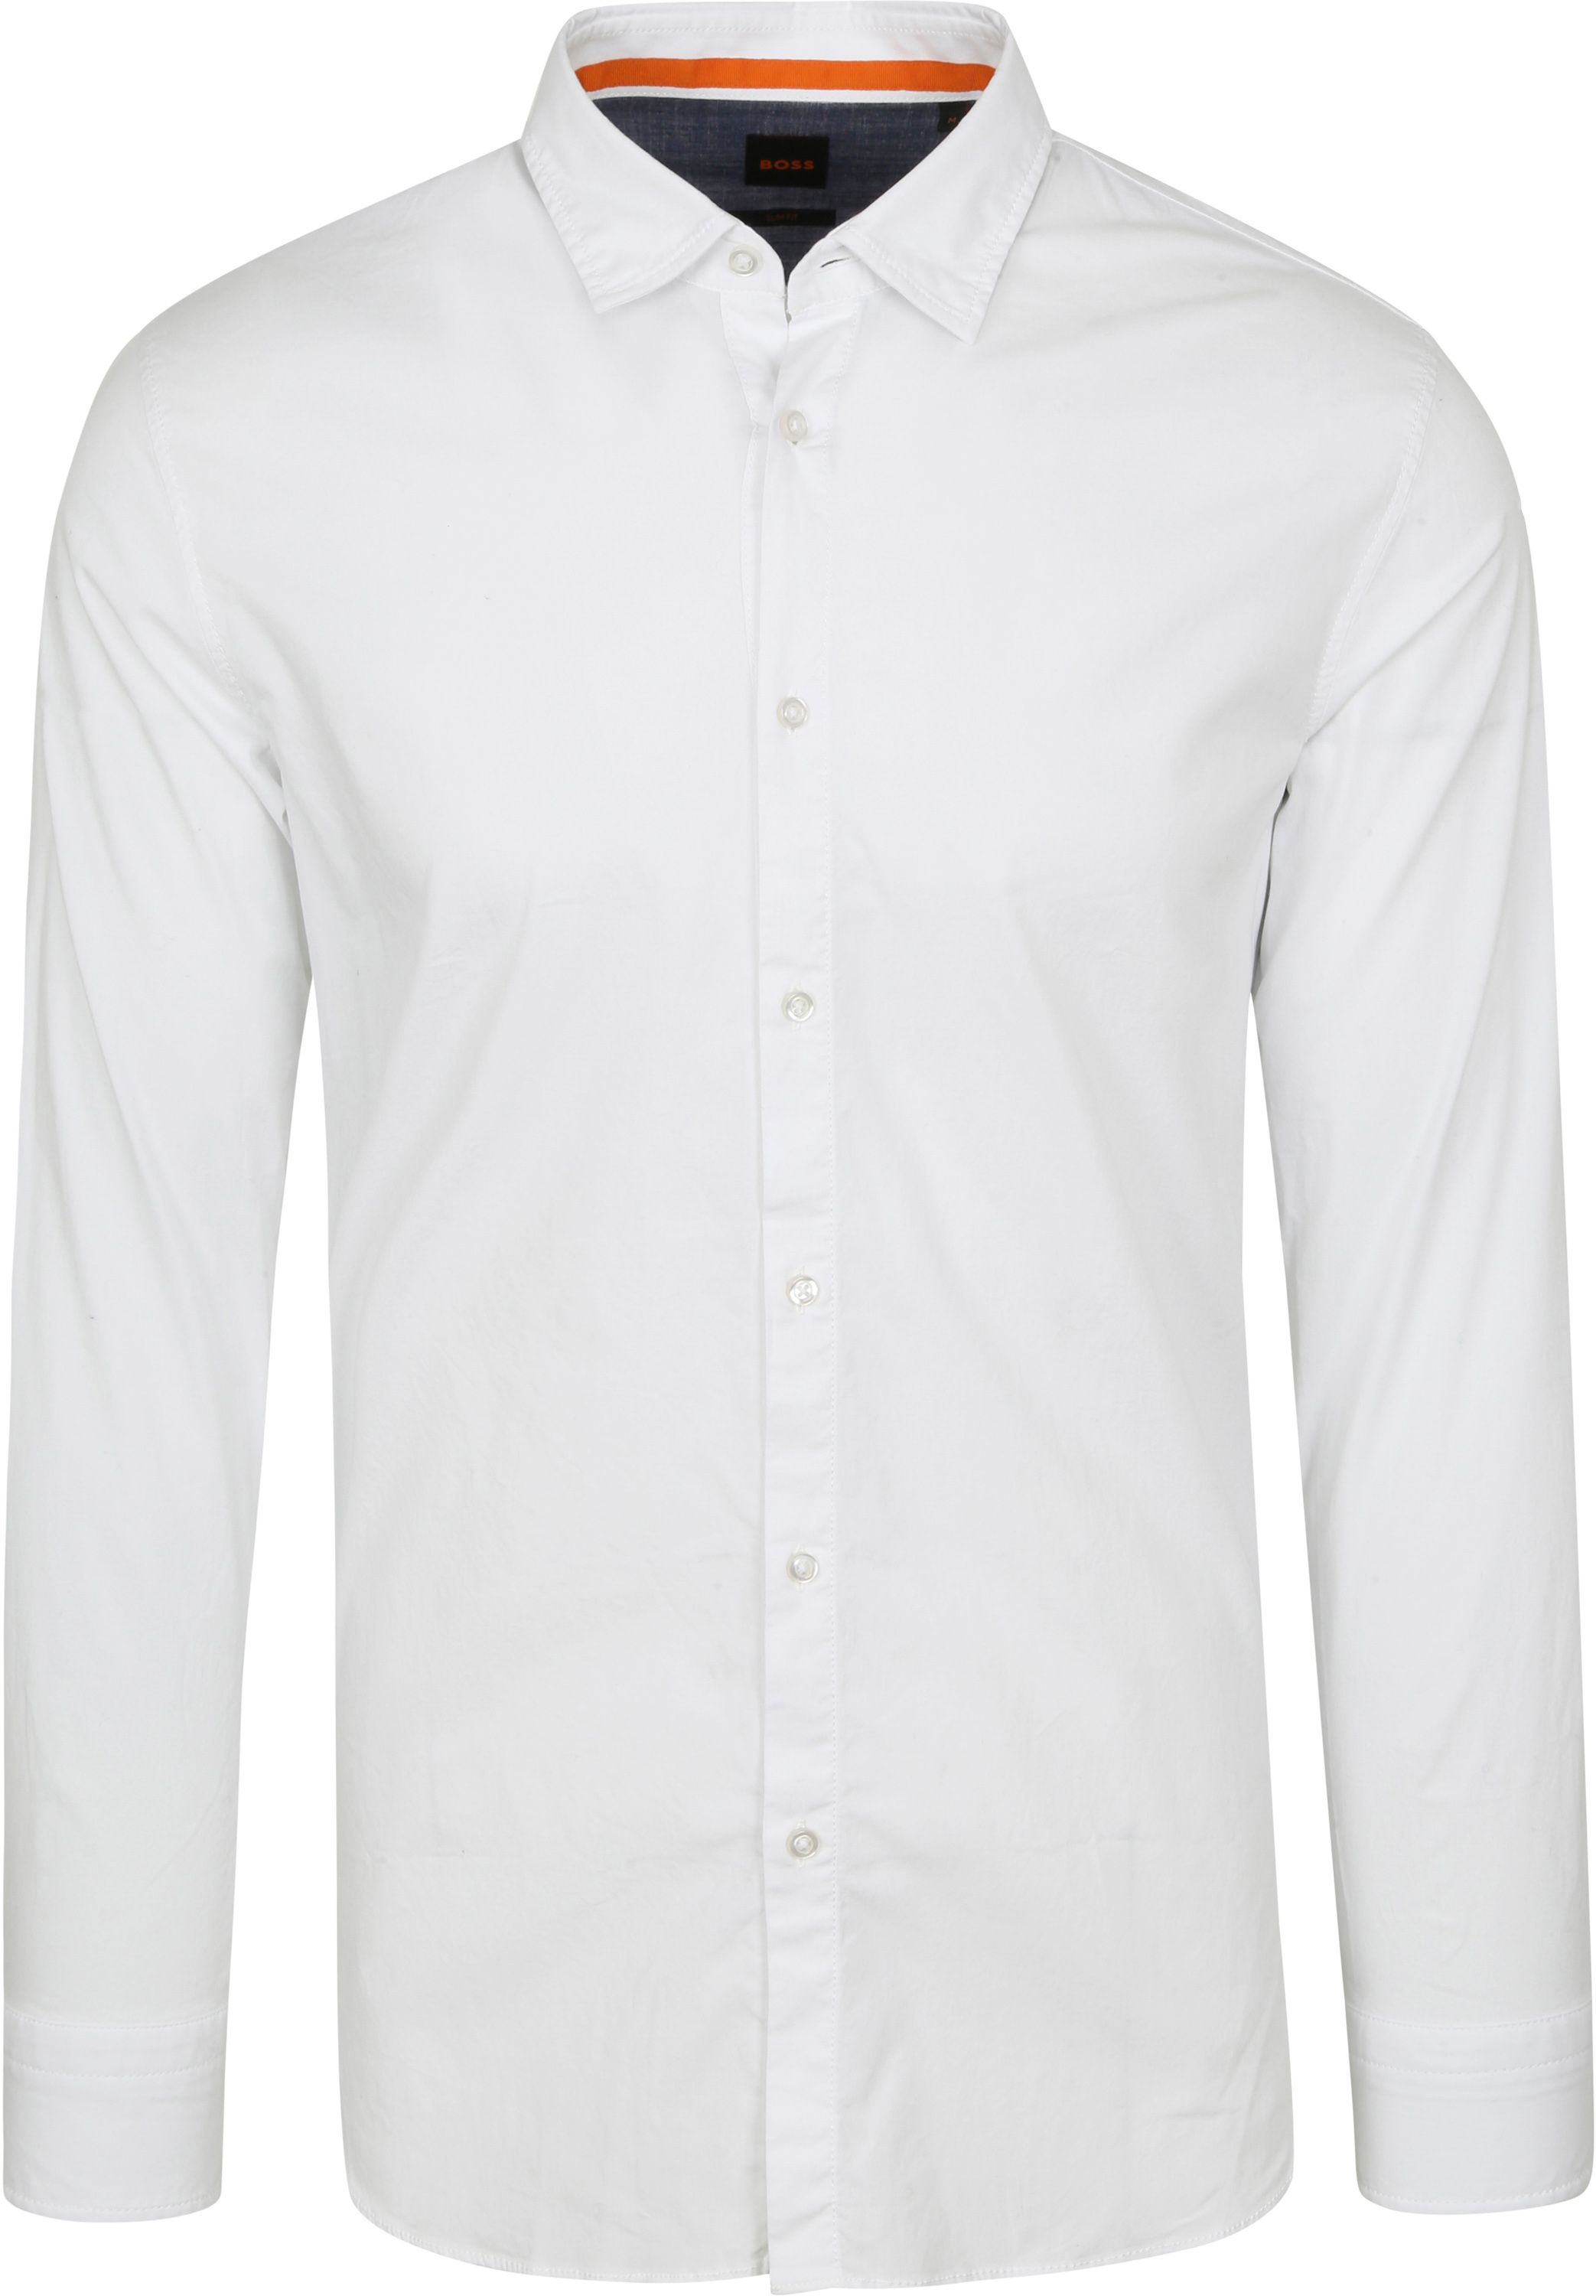 Hugo Boss Shirt White size XXL